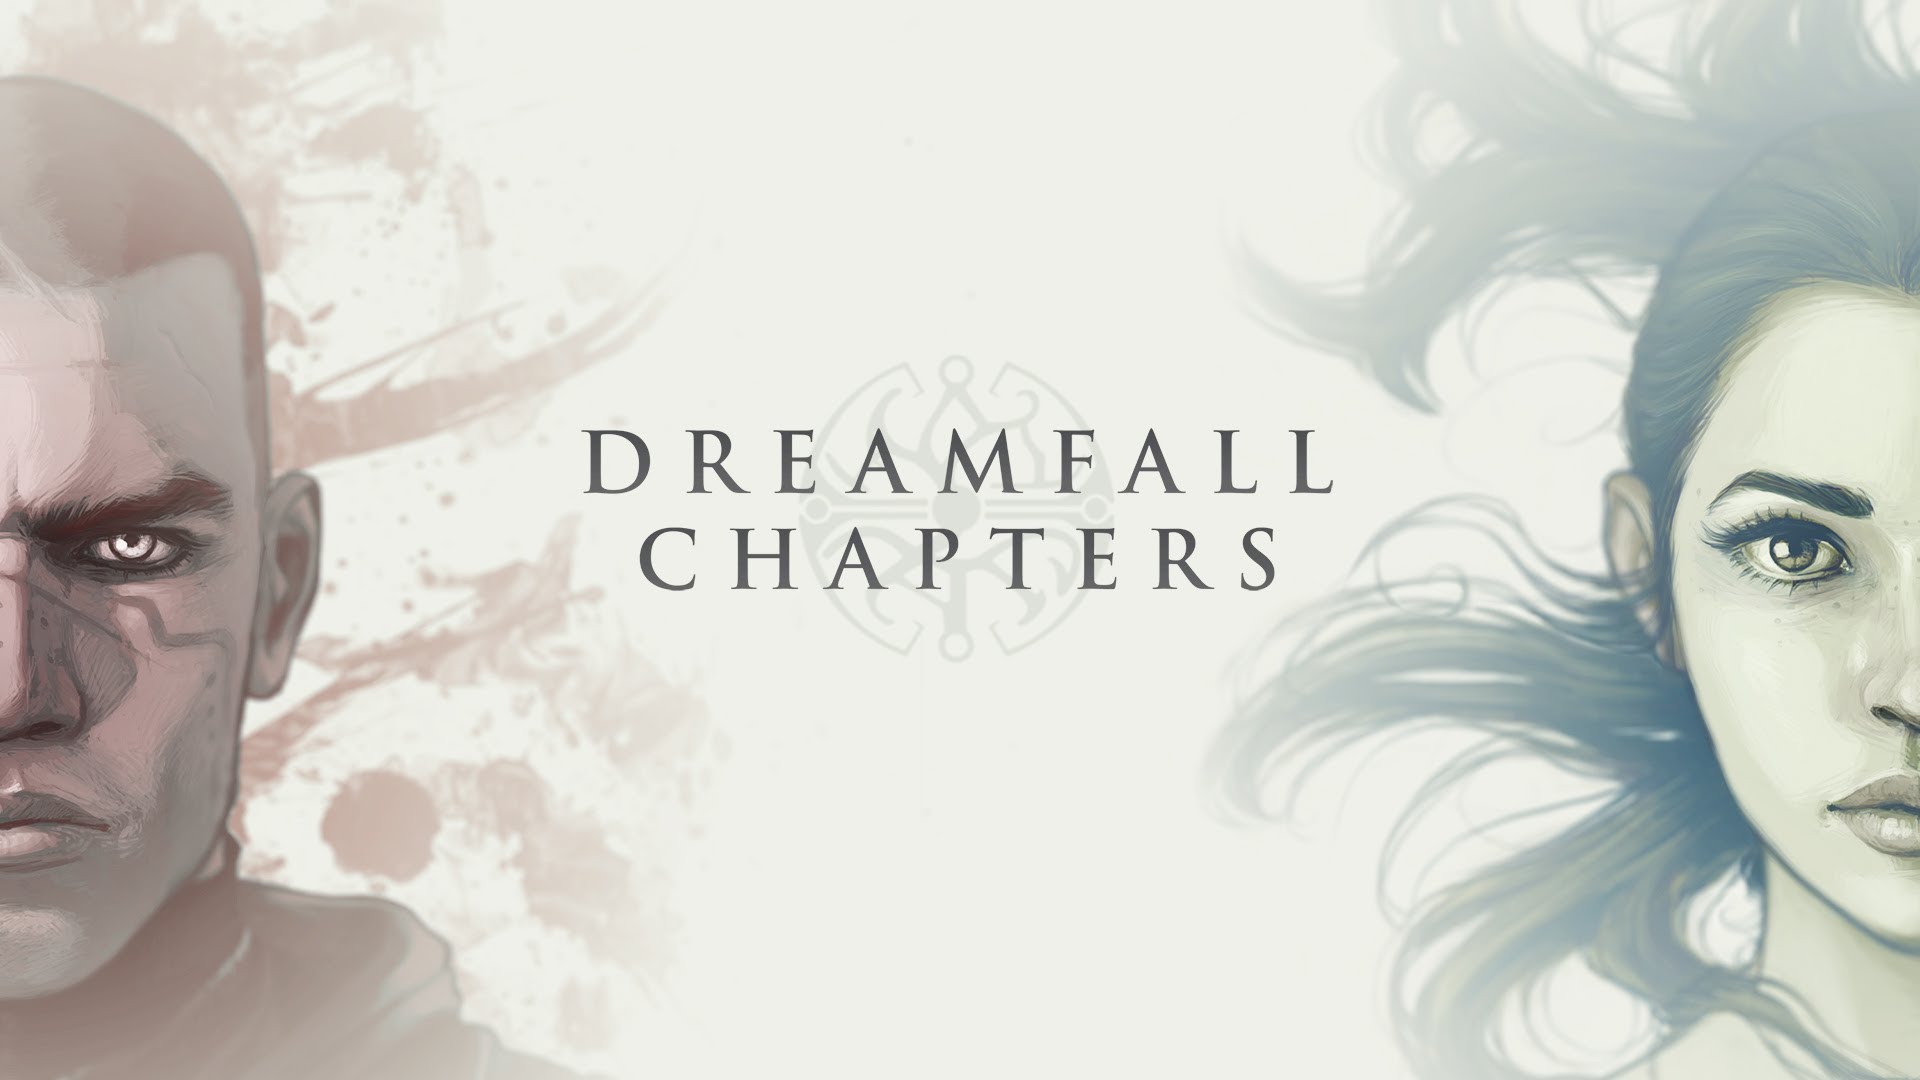 Dreamfall no dvd cracks on computer